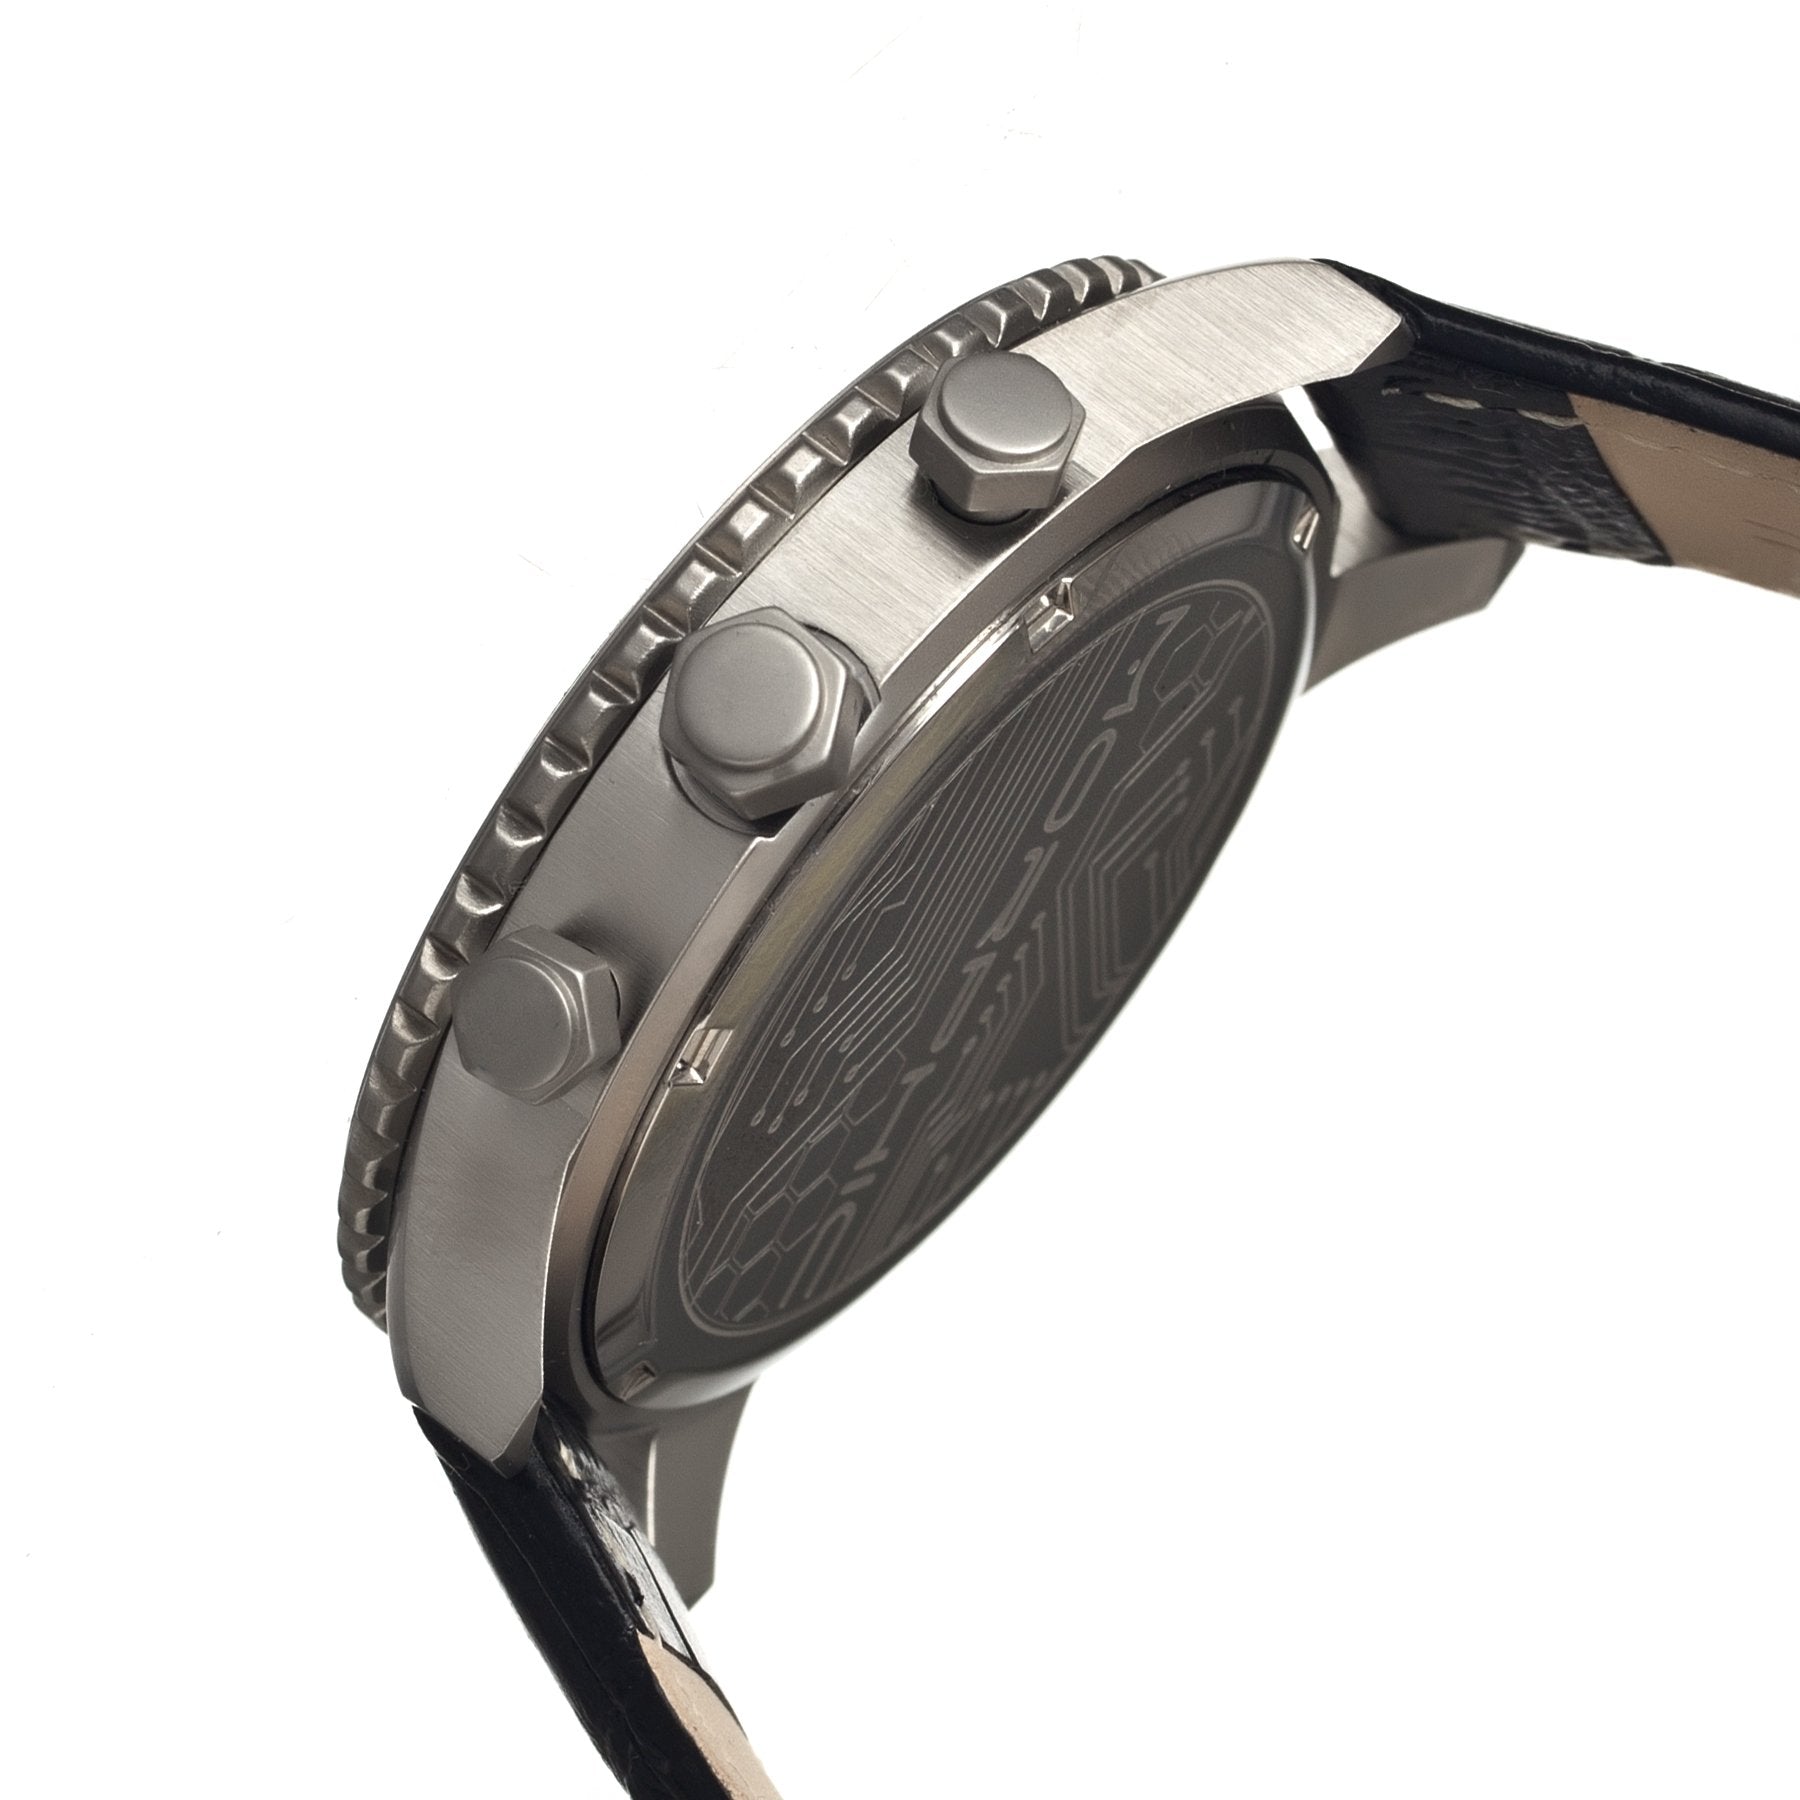 Morphic M33 Series Chronograph Men's Watch w/ Date - Silver/Black - MPH3302